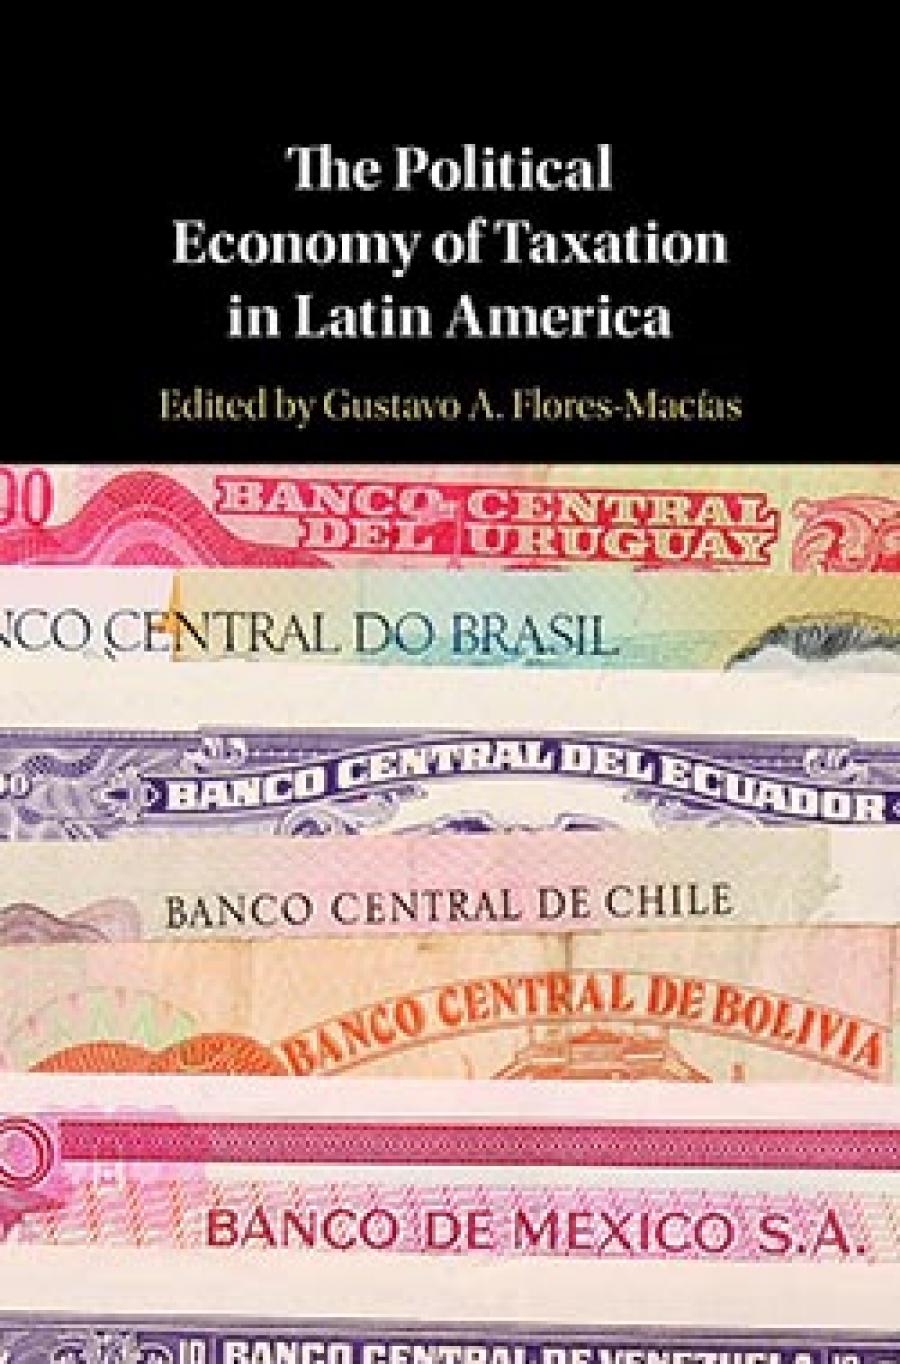 Book on Latin American taxation